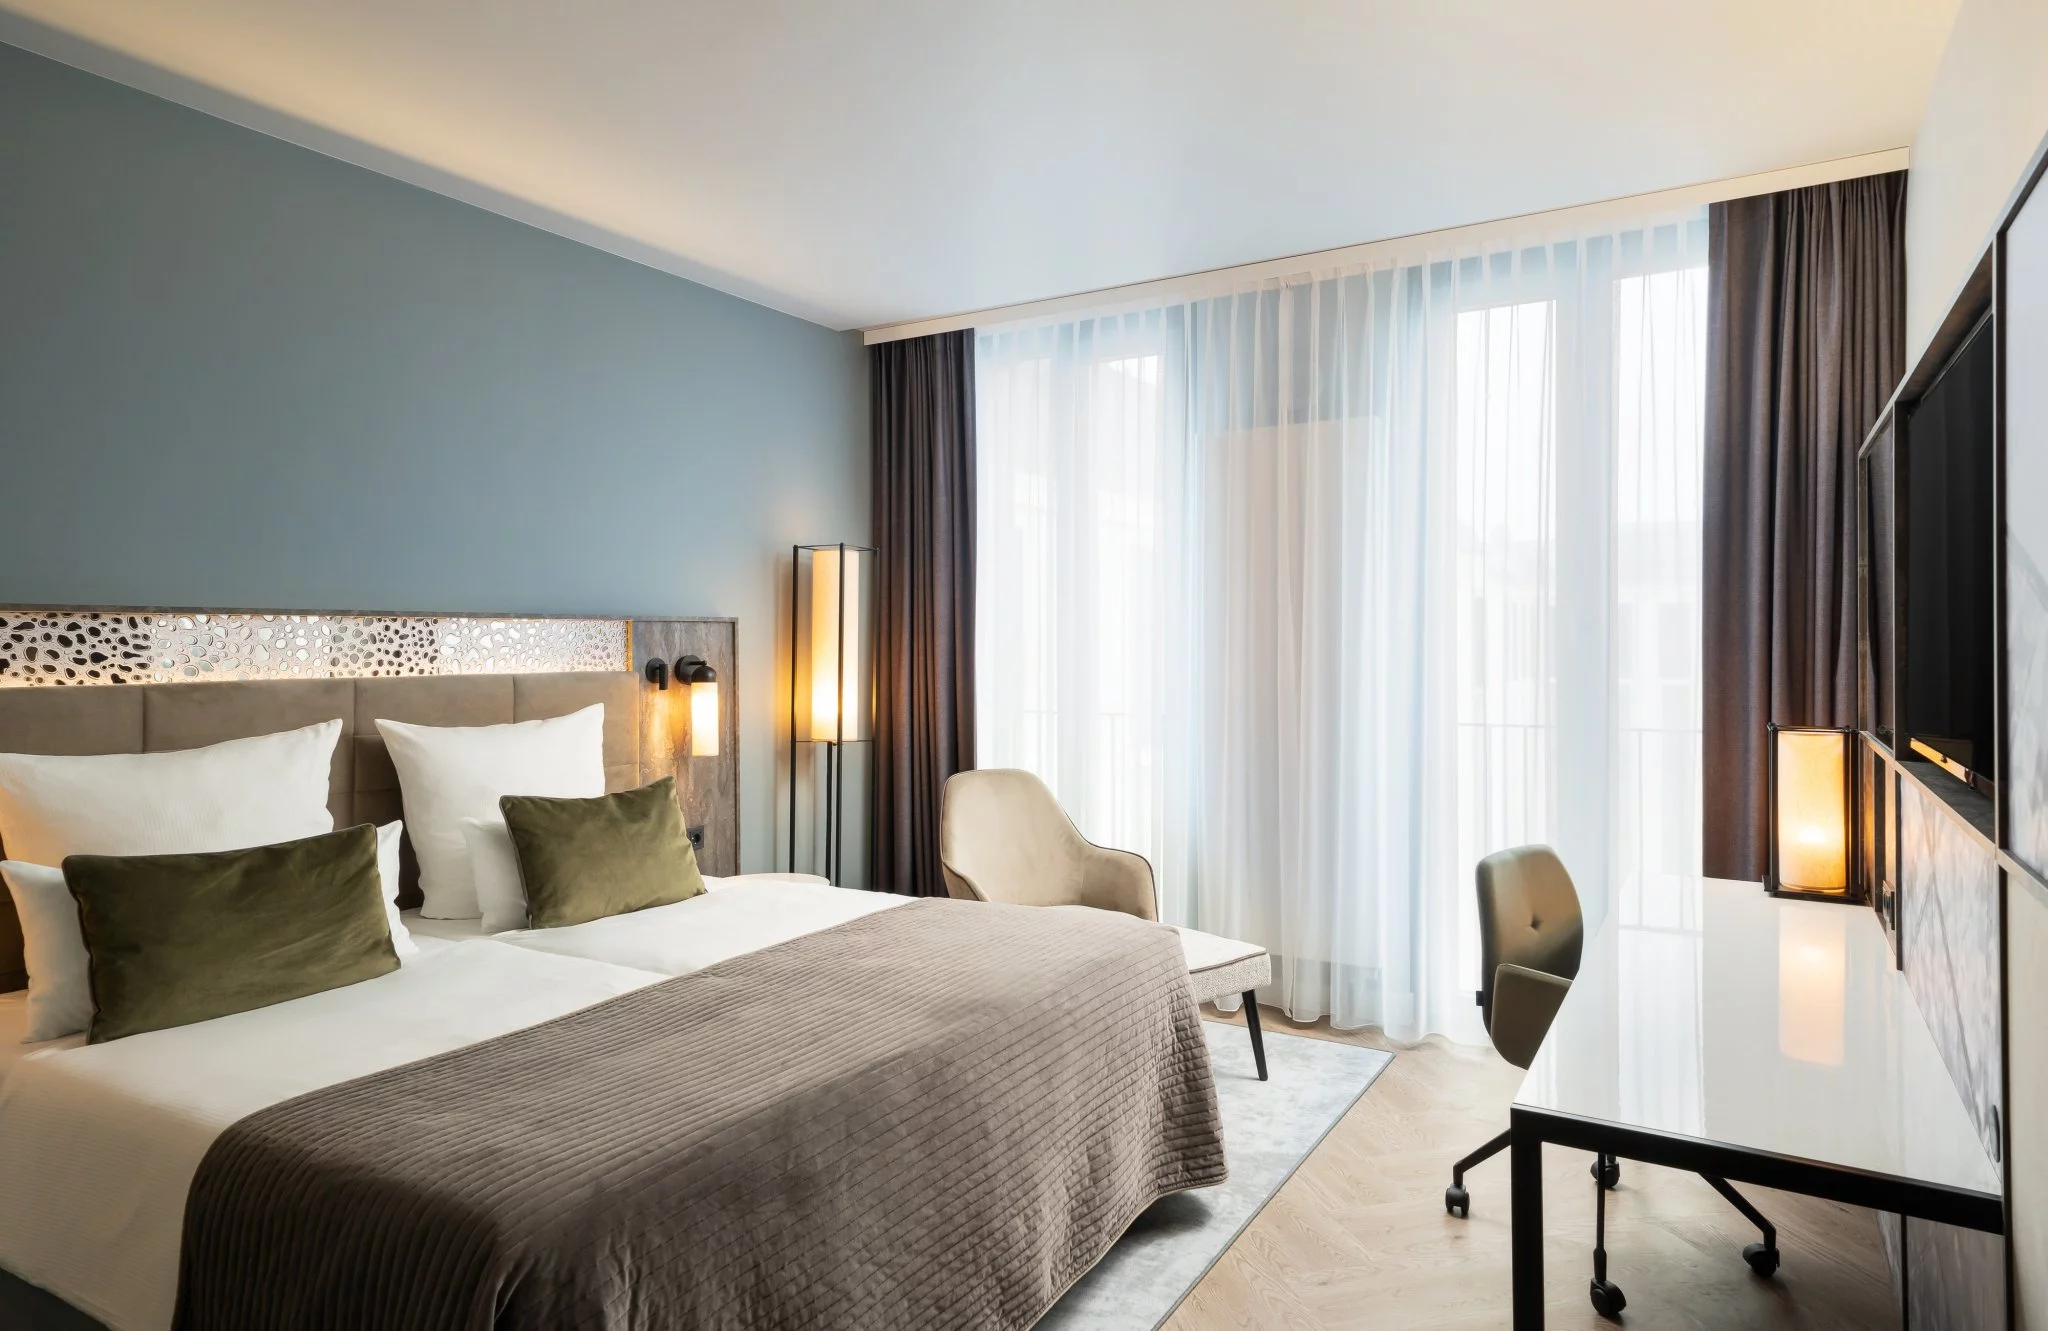 Leonardo Royal Hotel Munich - Superior Room